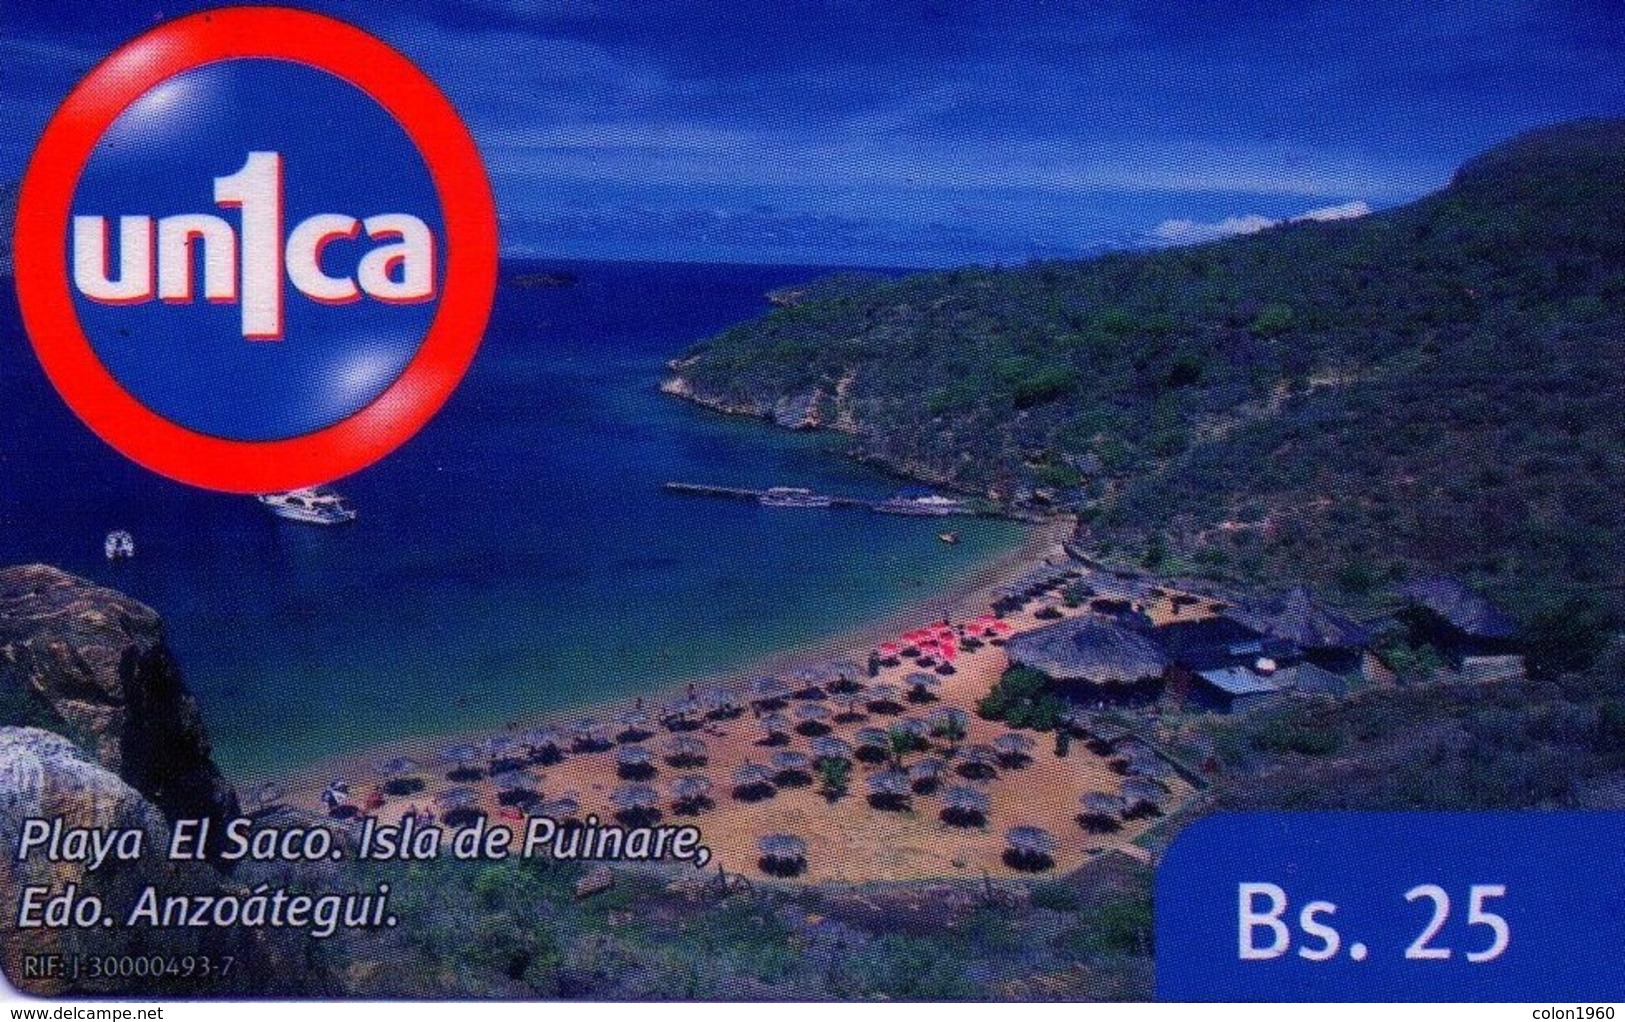 VENEZUELA, GSM-RECARGA. Playa El Saco. Isla De Puinare, Edo. Anzoáteguí. CL090901. VE-UNICA-C-090901. (307). - Venezuela